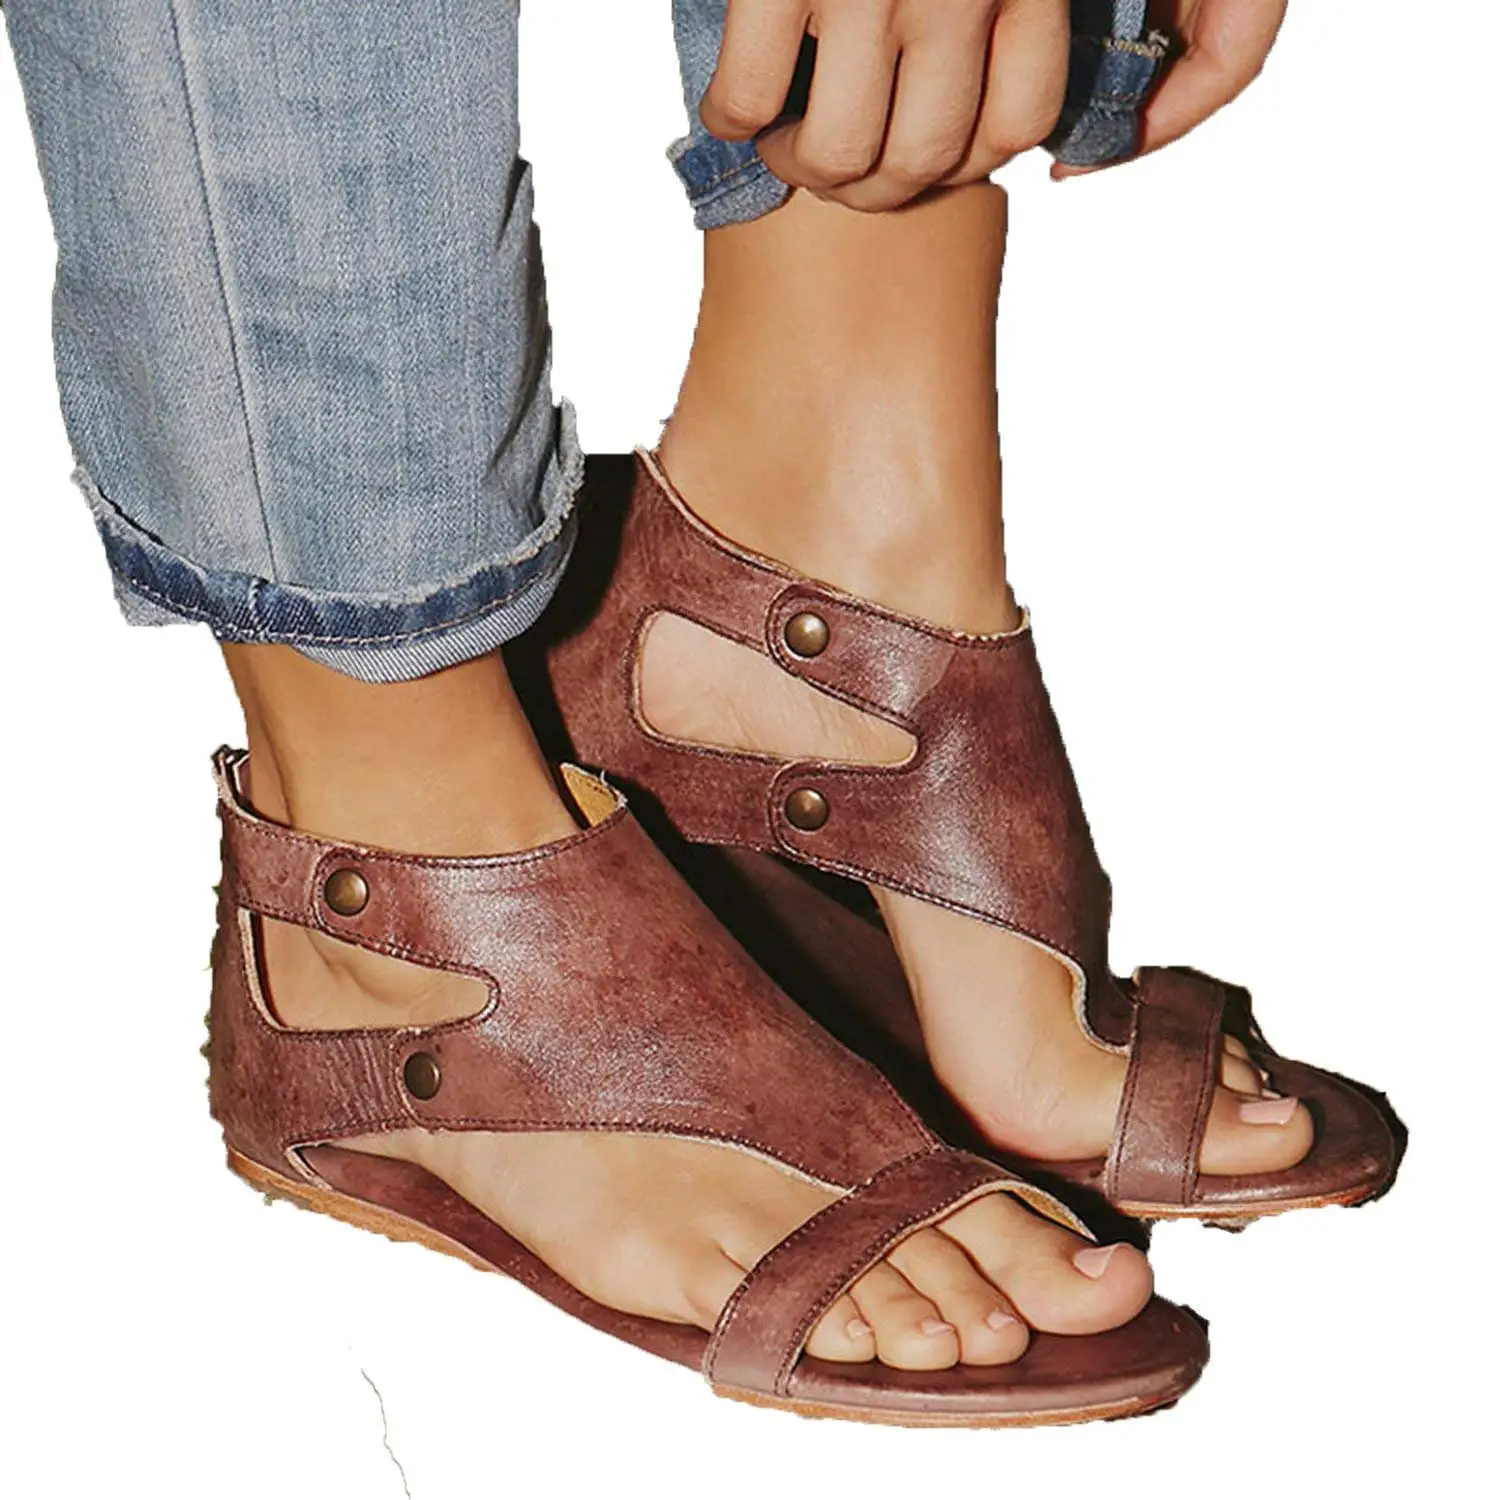 womens flat sandals size 12